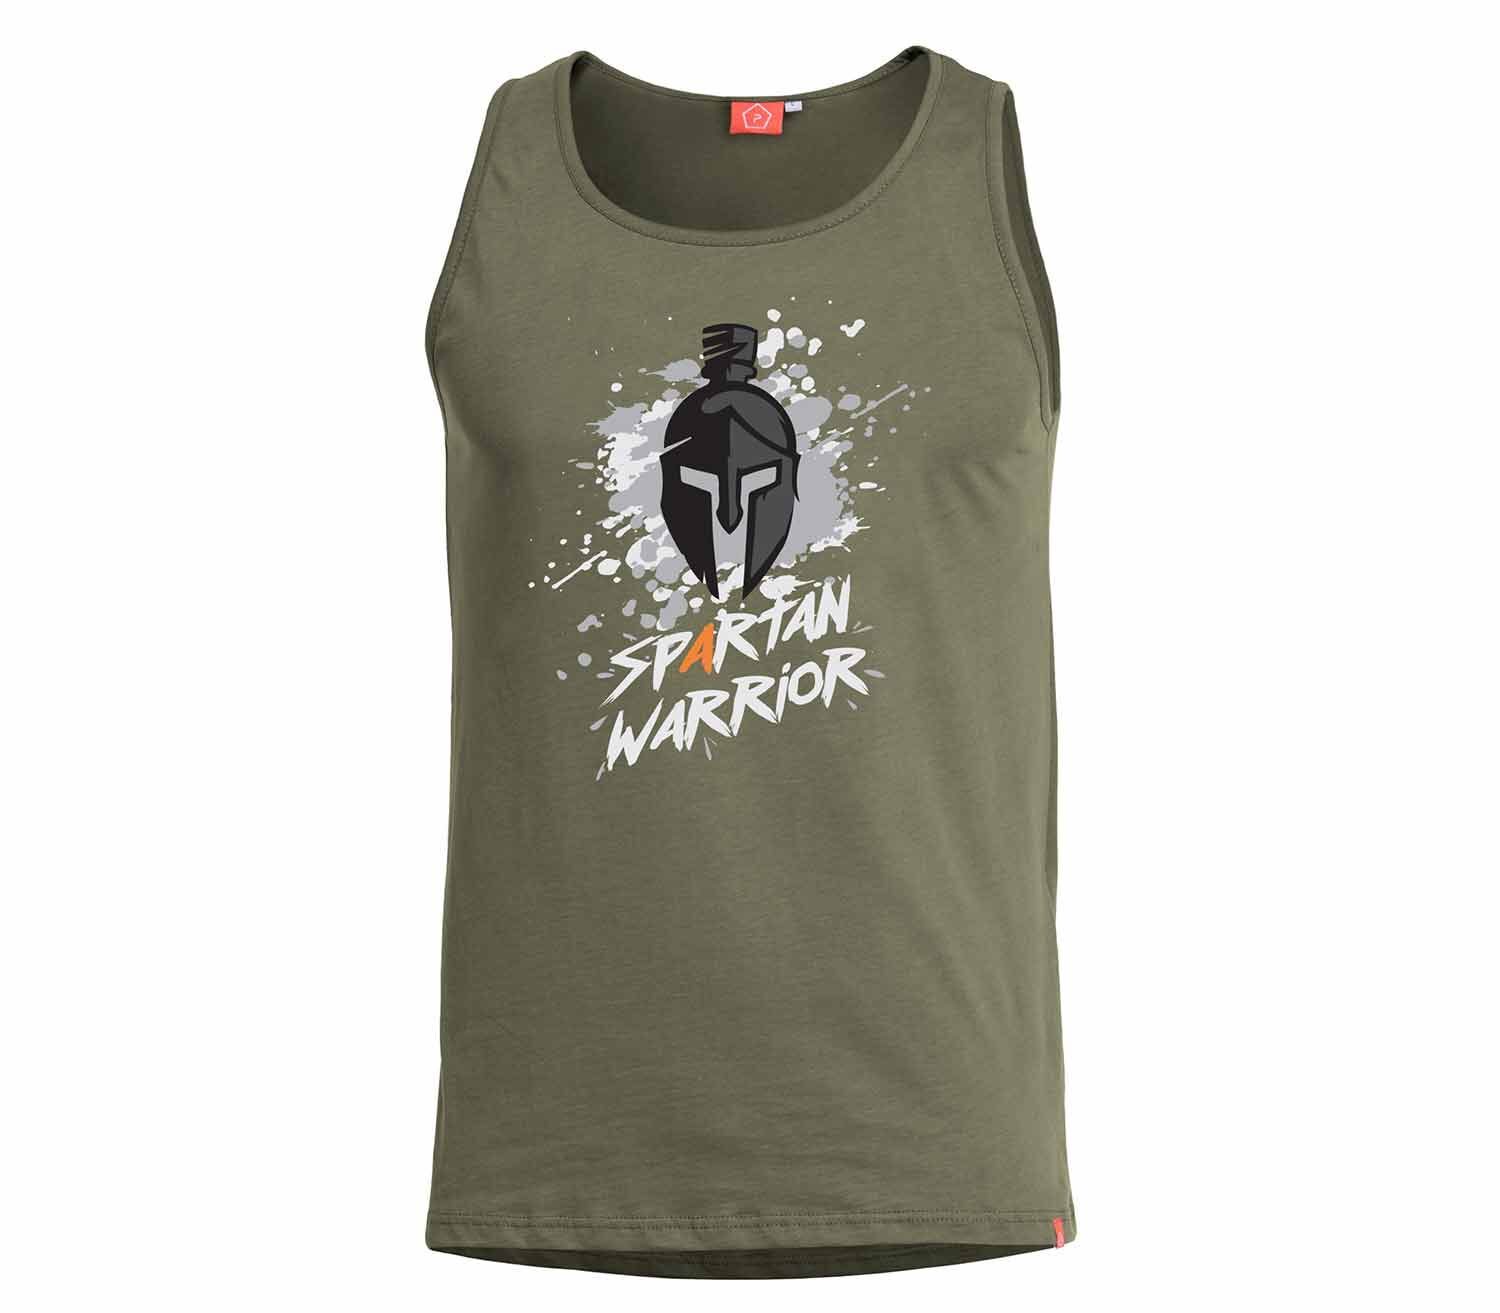 Camiseta-Pentagon-Astir-Spartan-Warrior-Oliva.jpg